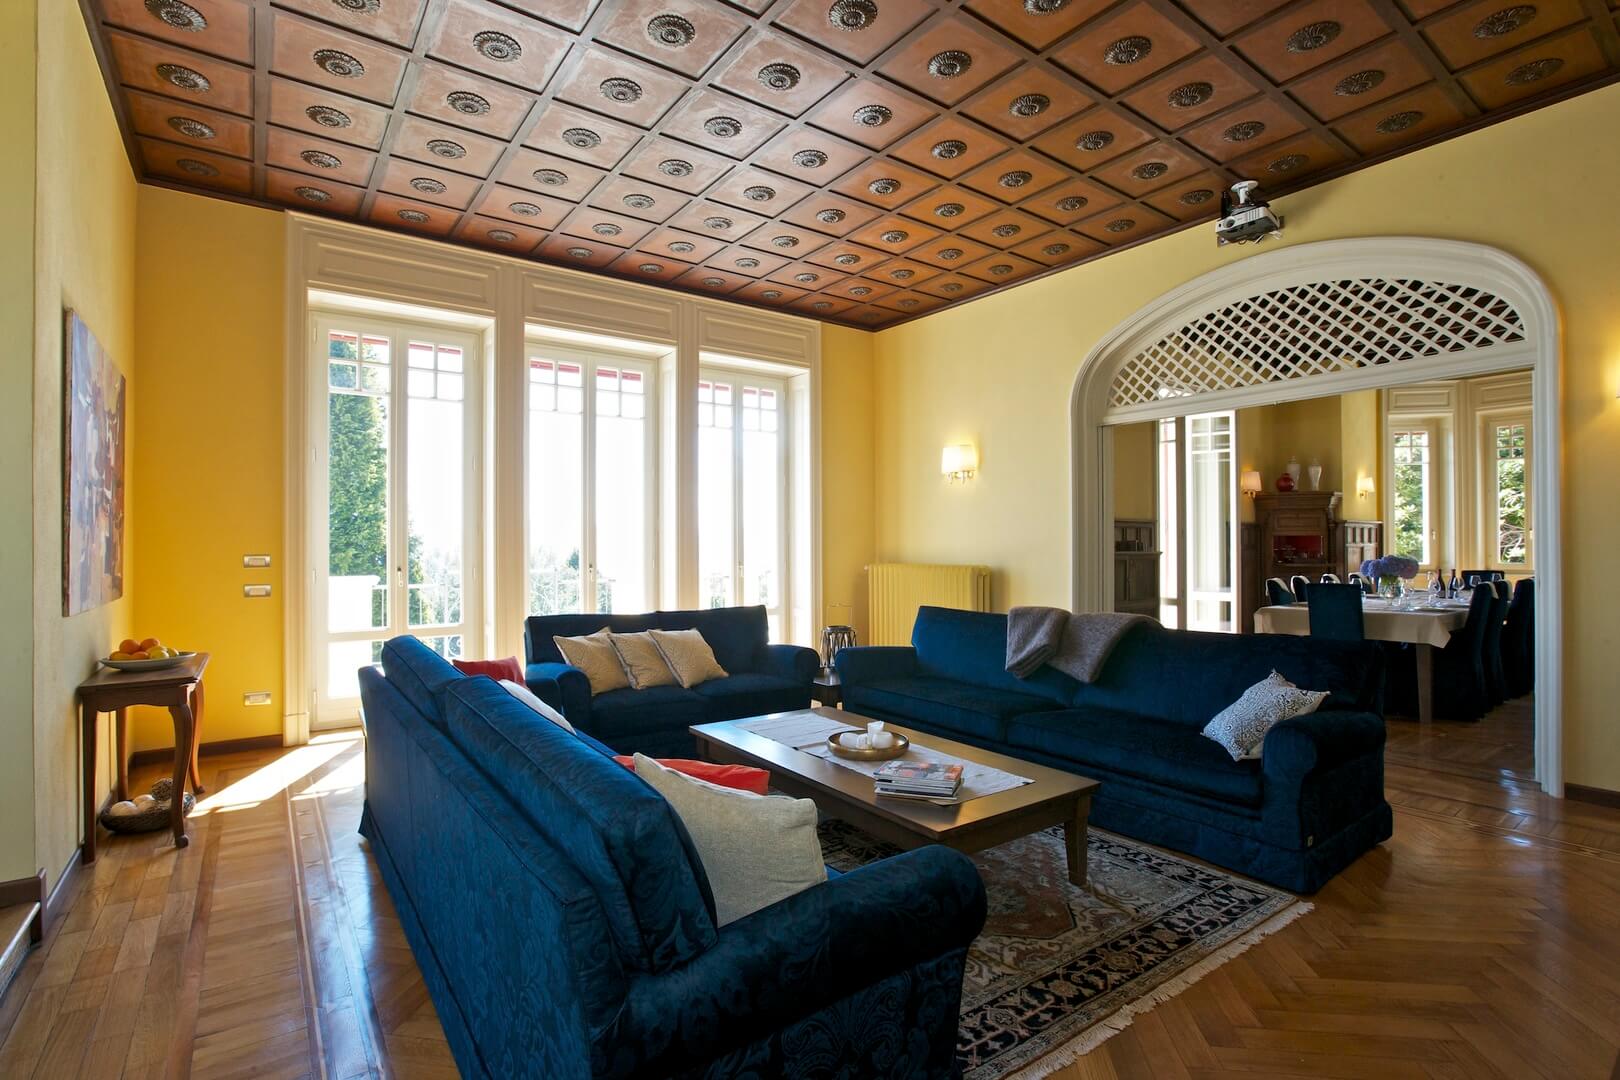 At Villa Confalonieri your comfort is central